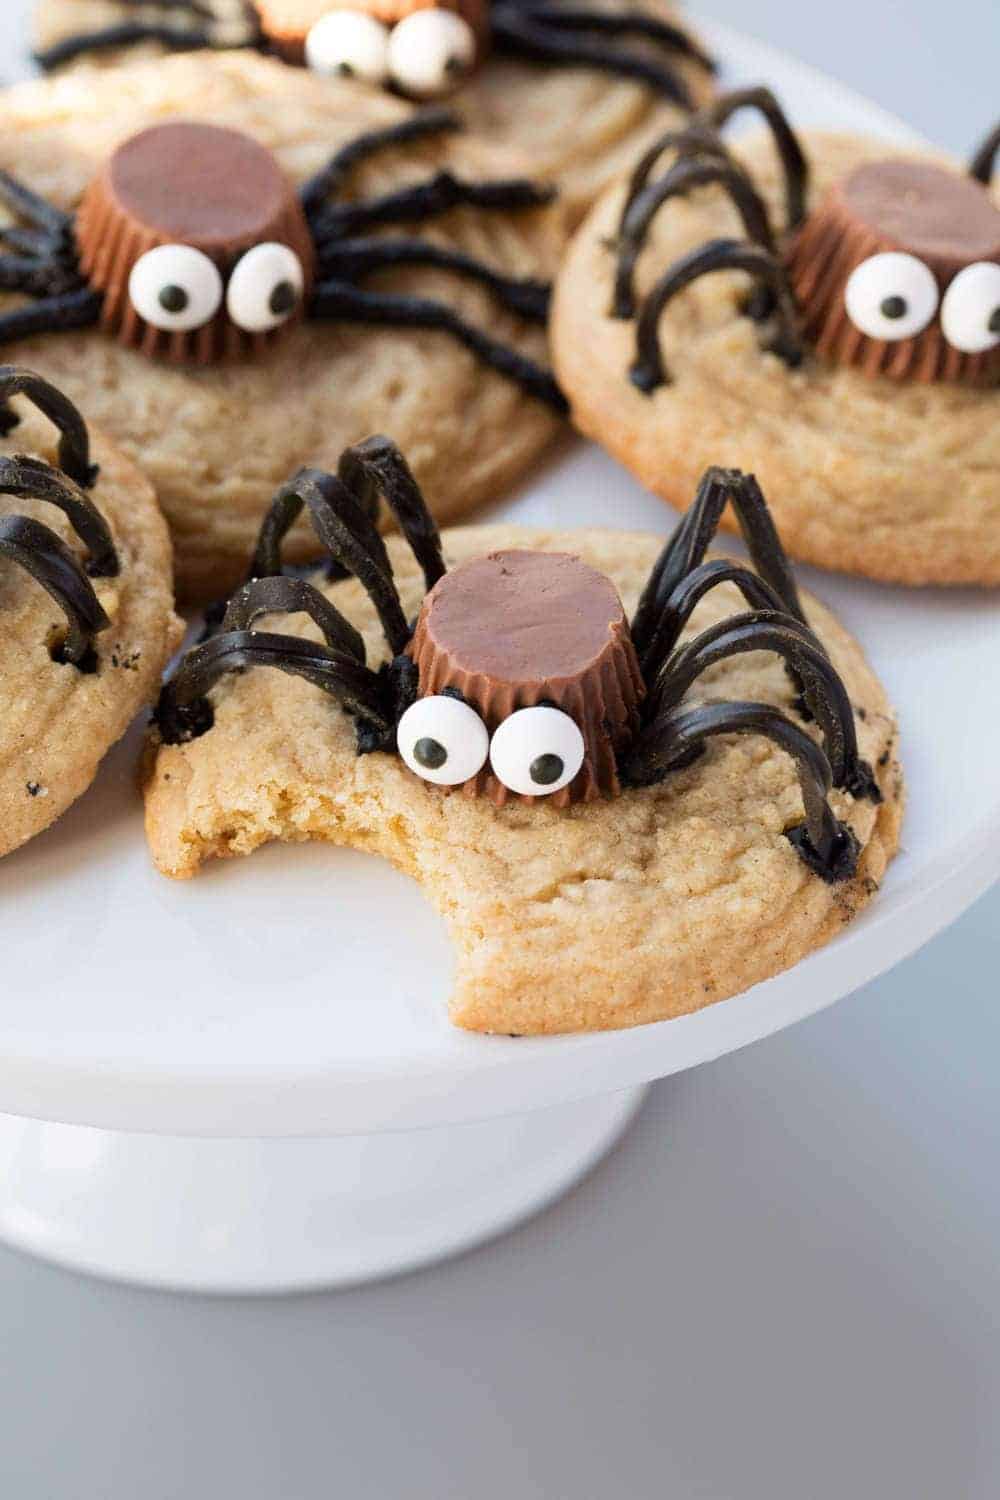 Spider cookies together. 